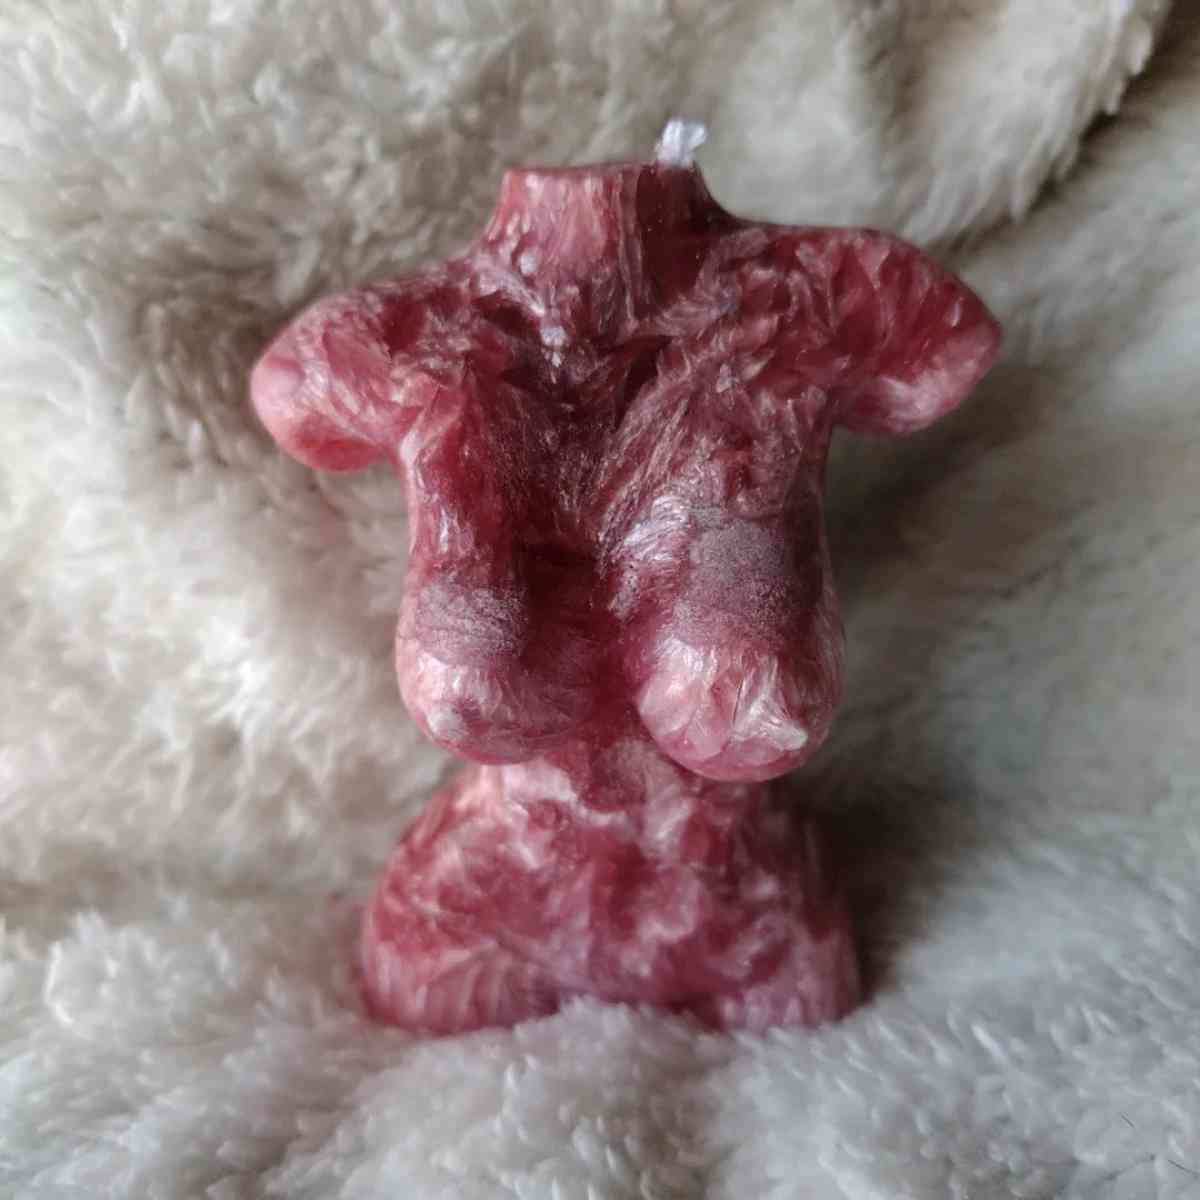 Cedarwood scented Female Body Mold